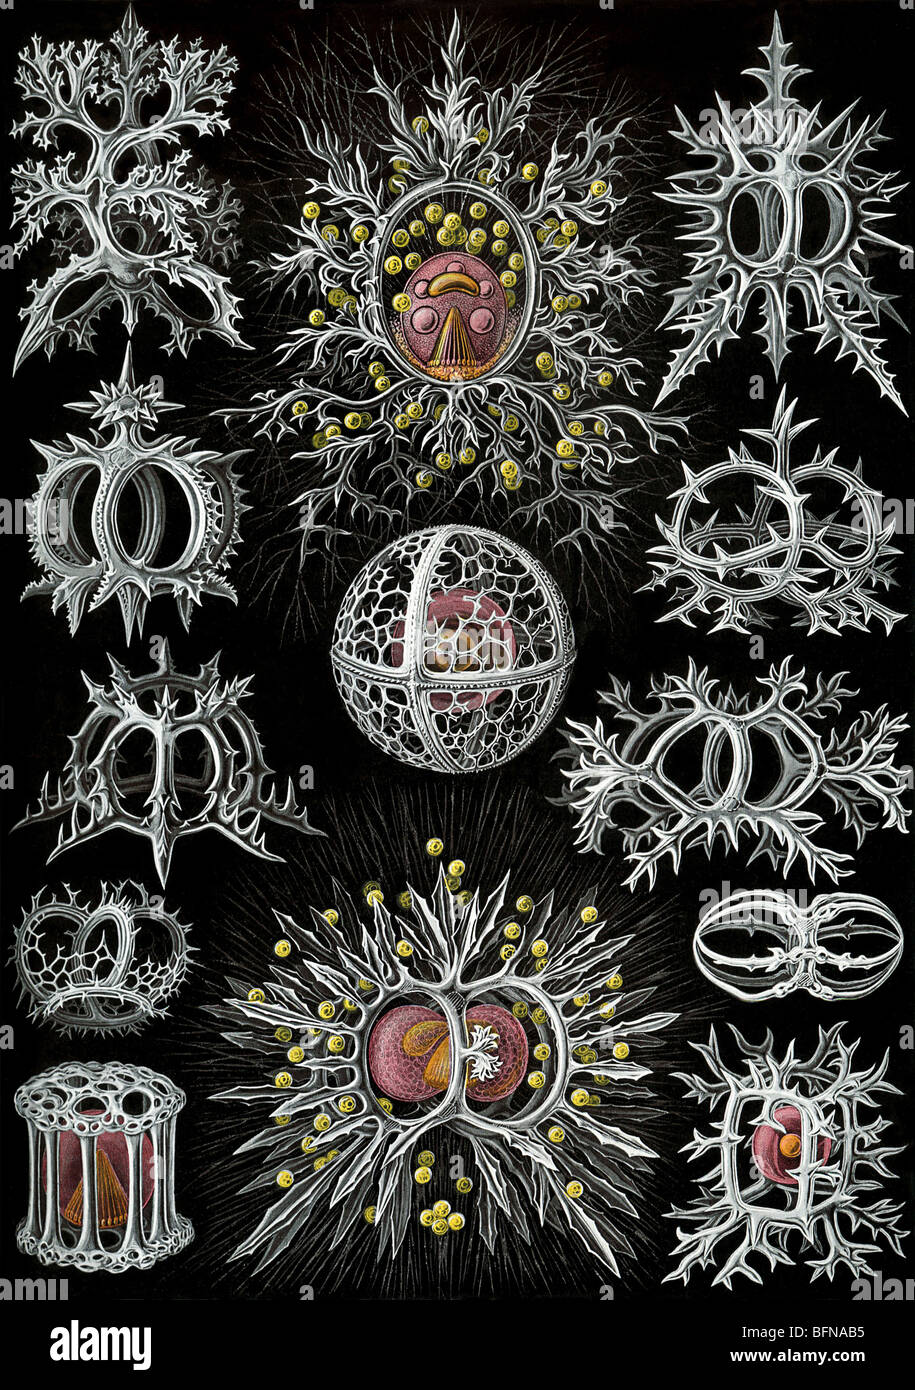 The 71st plate from Ernst Haeckel's Kunstformen der Natur (1904), showing Radiolarians of the order Stephoidea. Stock Photo